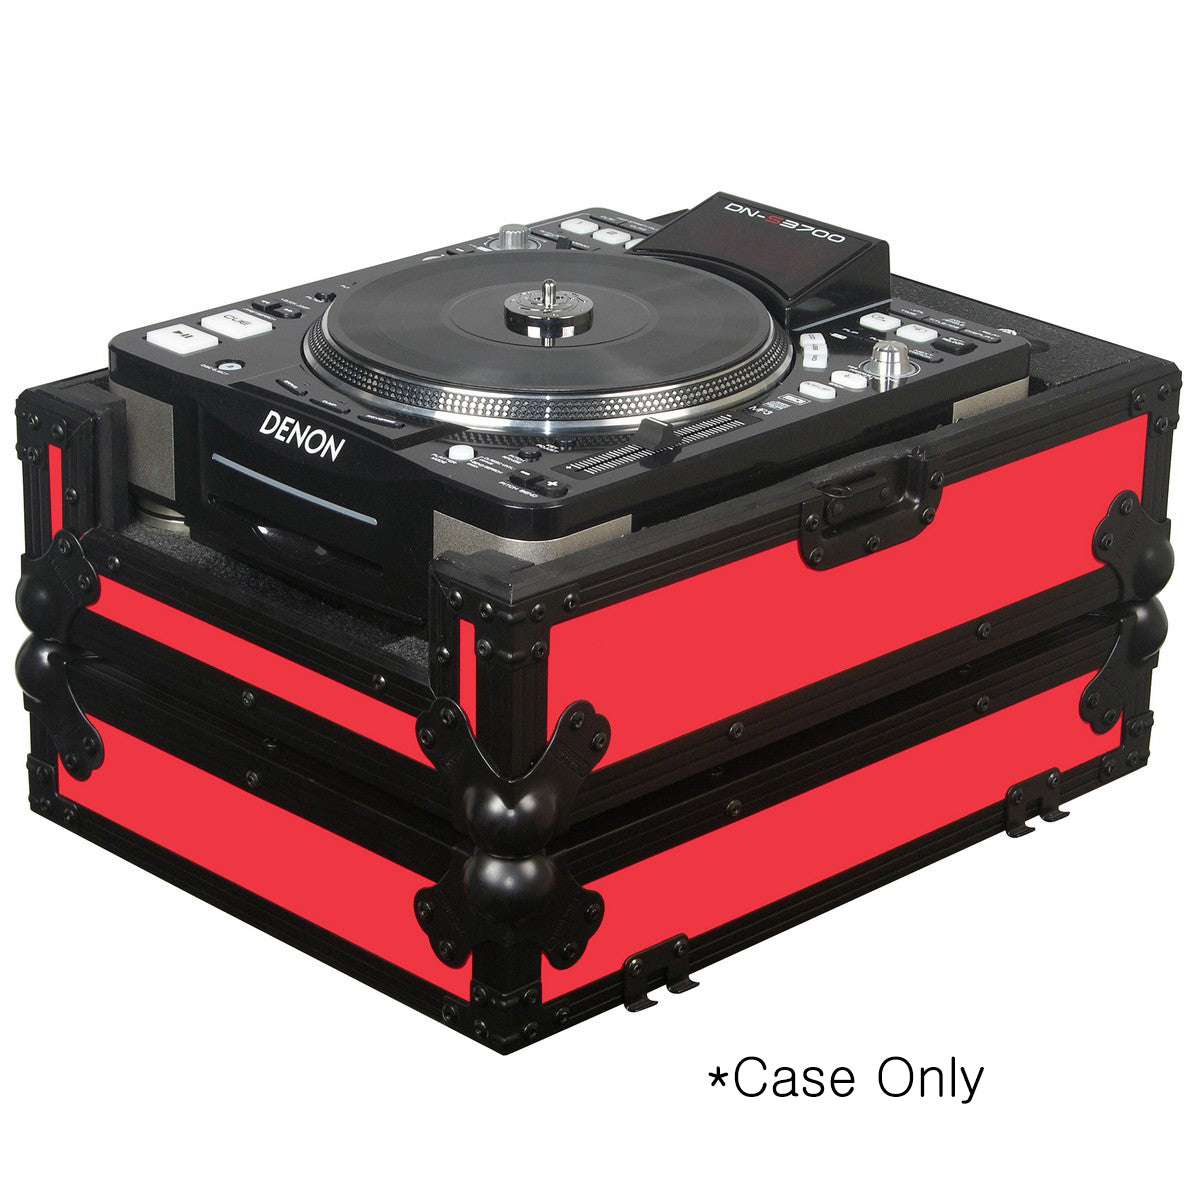 Odyssey Cases FRCDJBKRED | Black Red Large Format Media Player Case